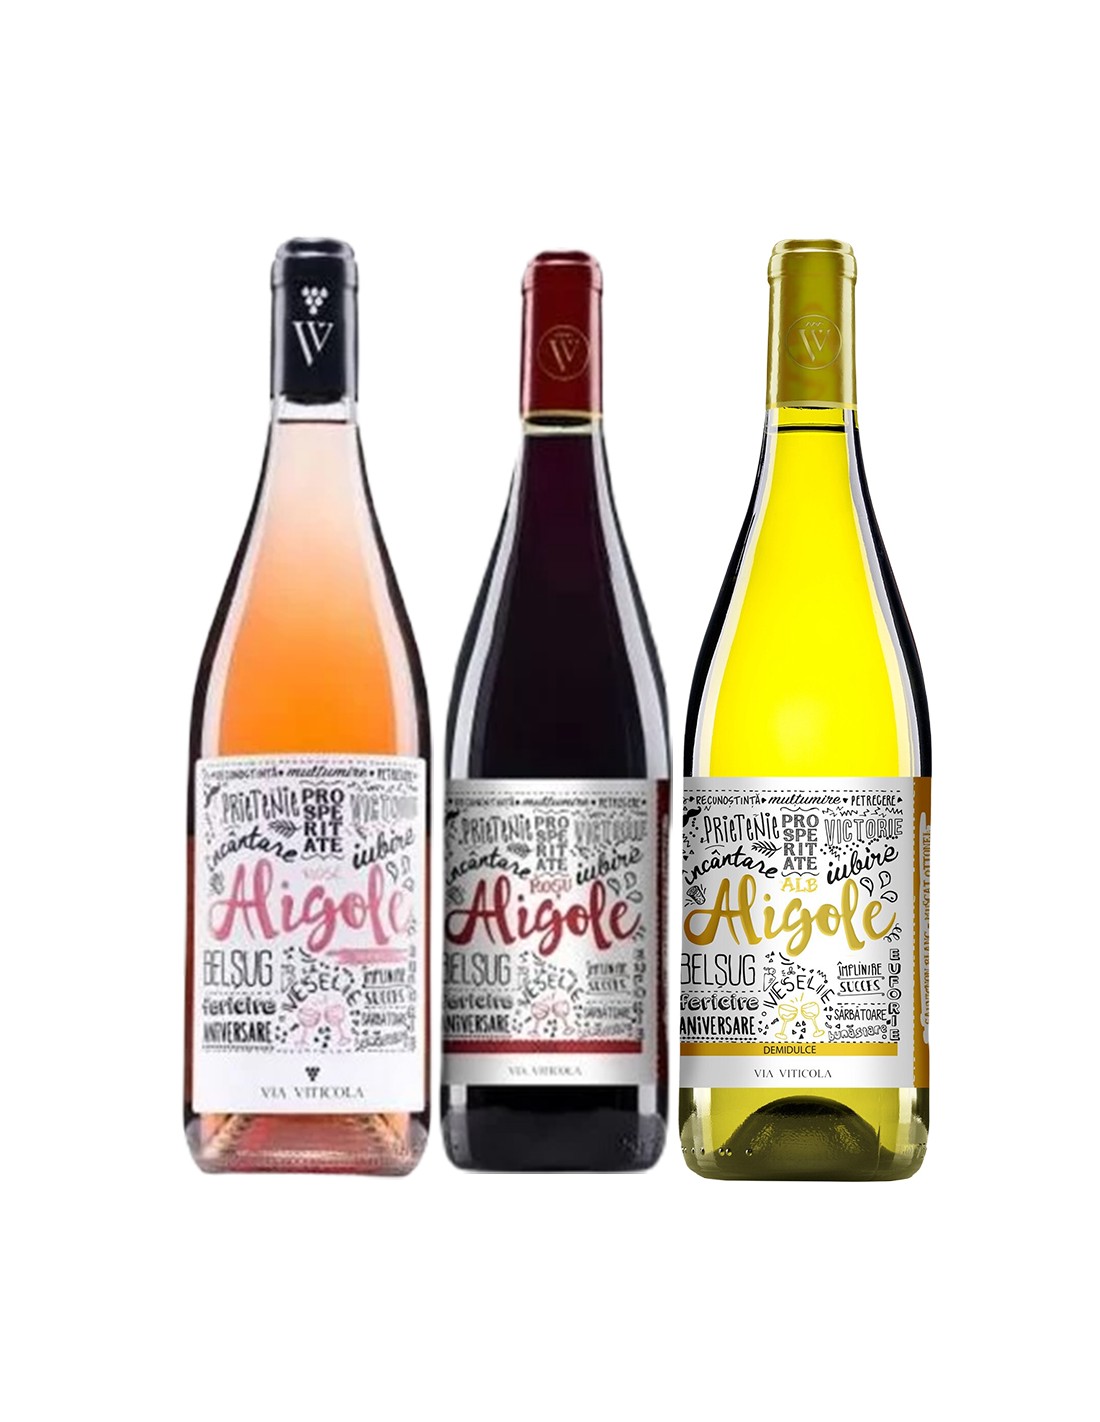 Pachet Aligole Greek Wine Selection alcooldiscount.ro